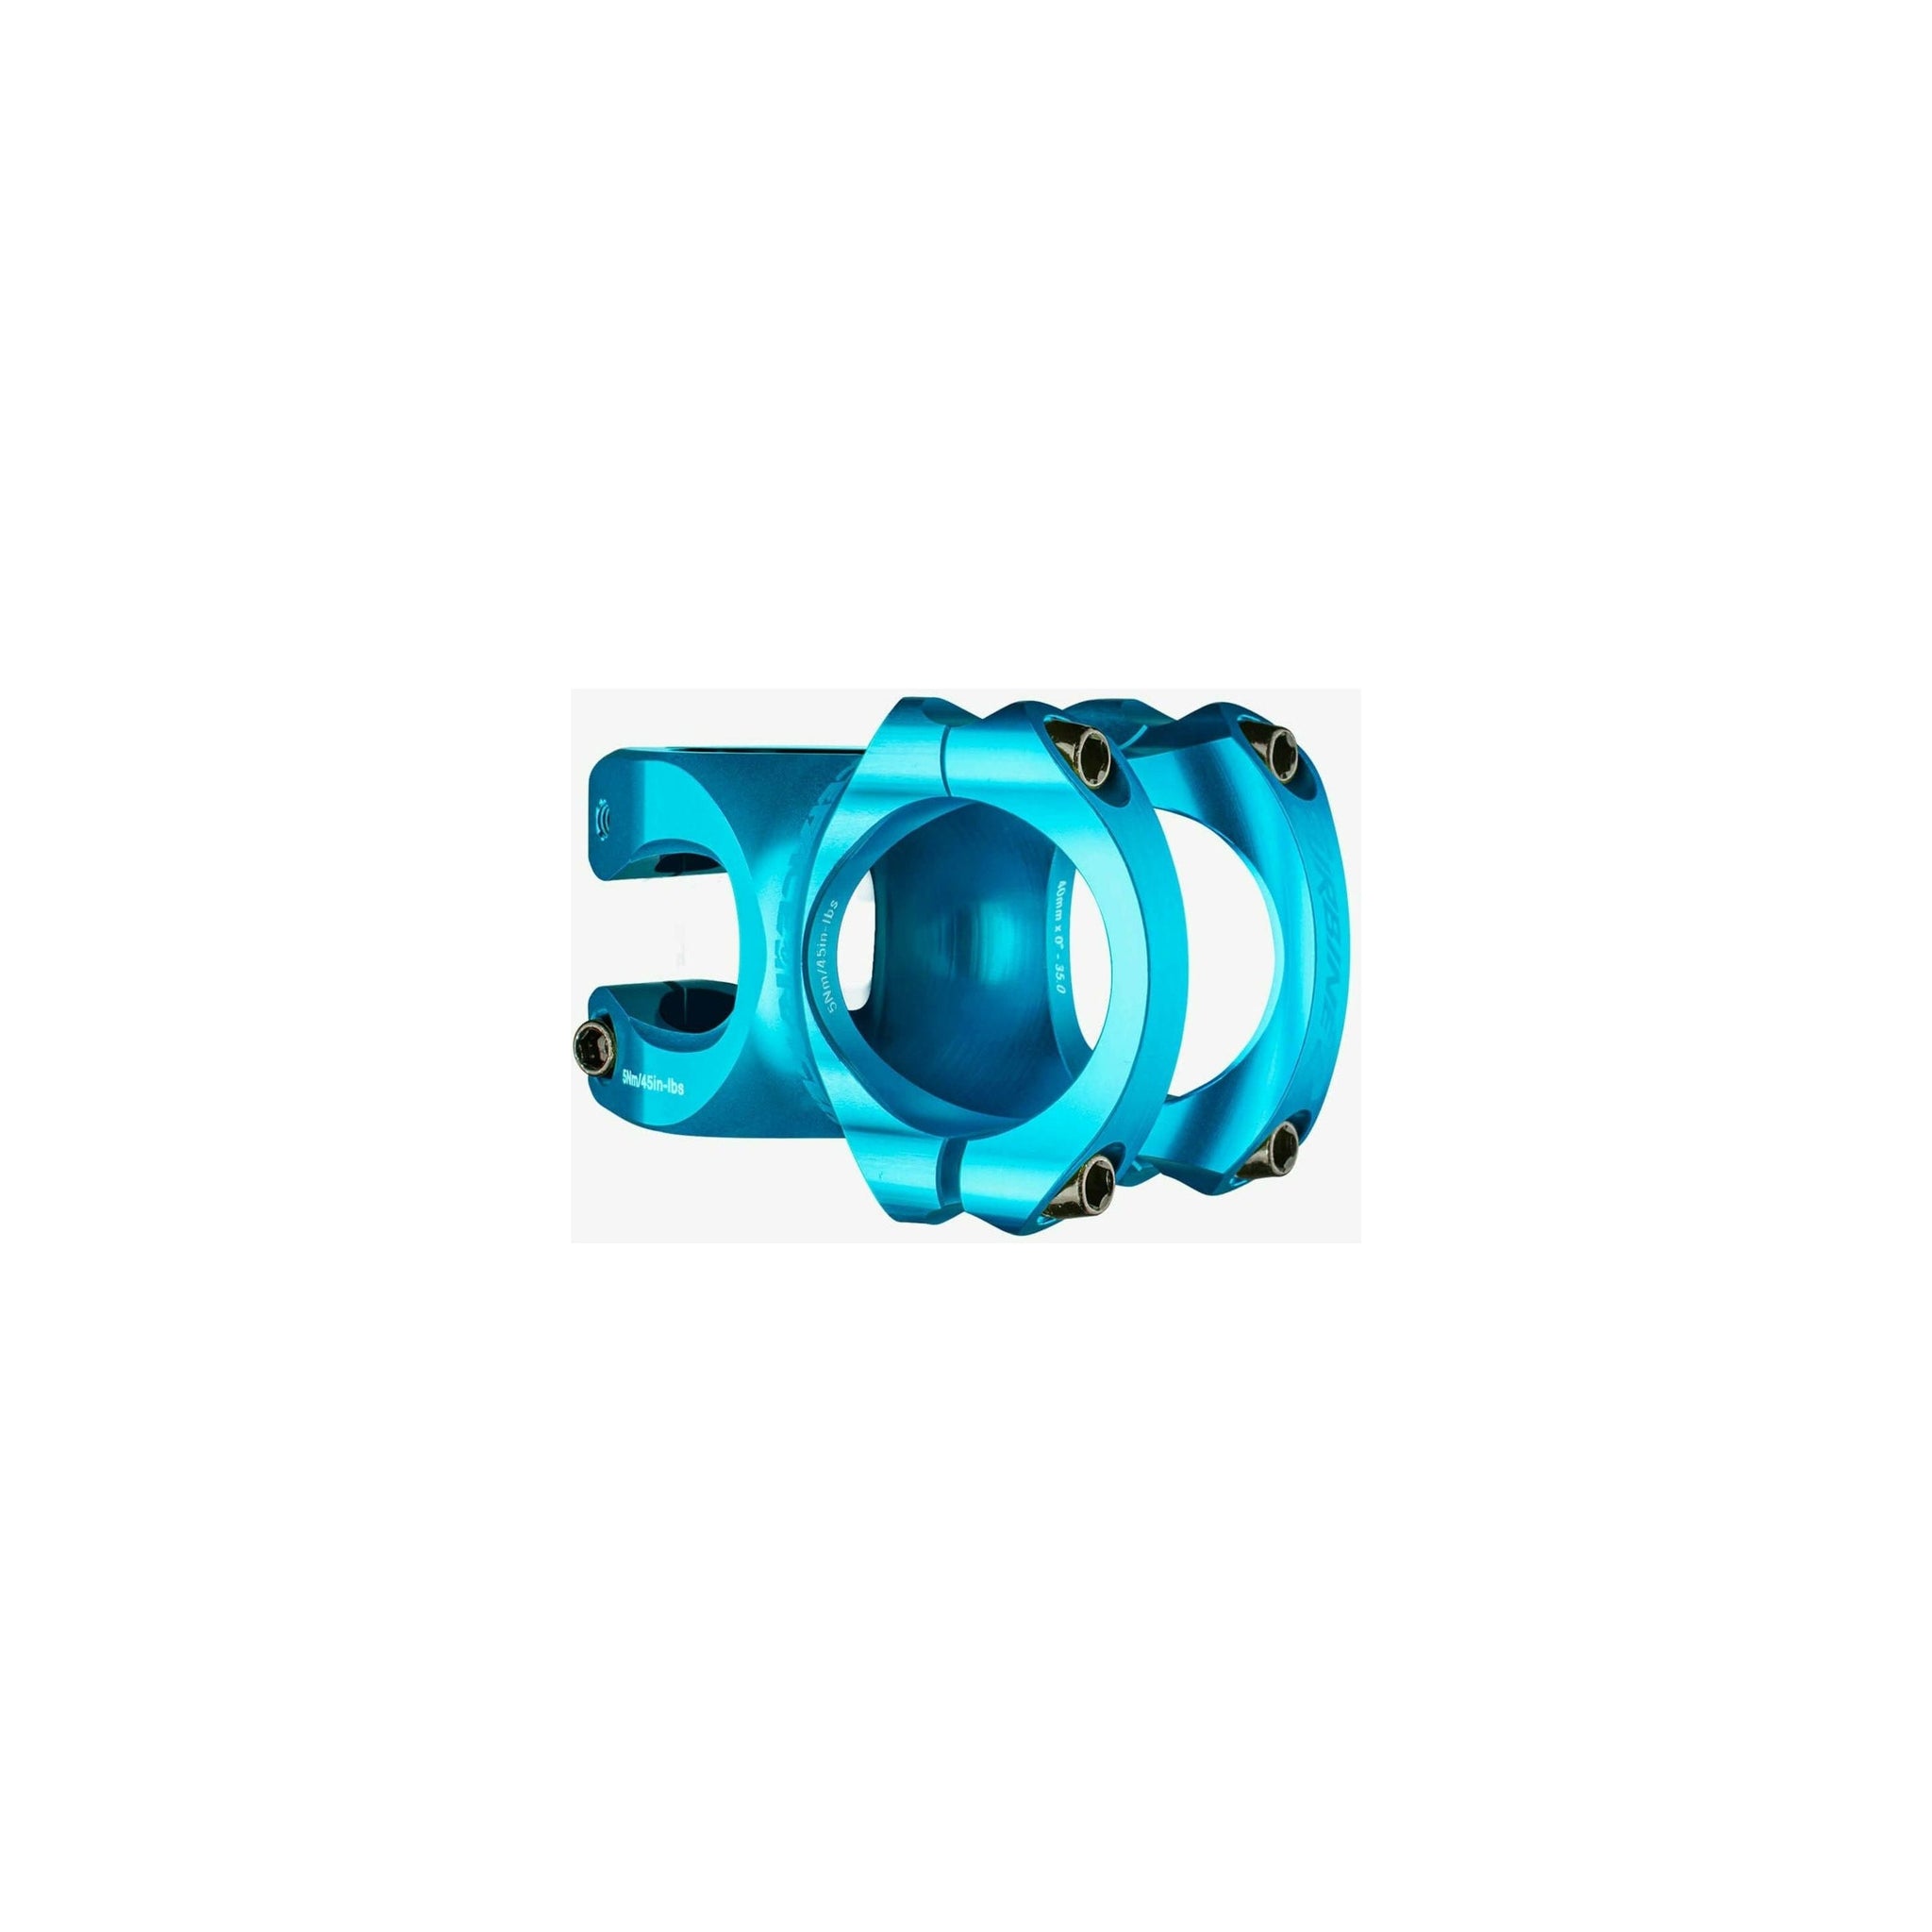 Potence Turbine R 35 (40mm) - Turquoise||Turbine R 35 Stem (40mm) - Turquoise